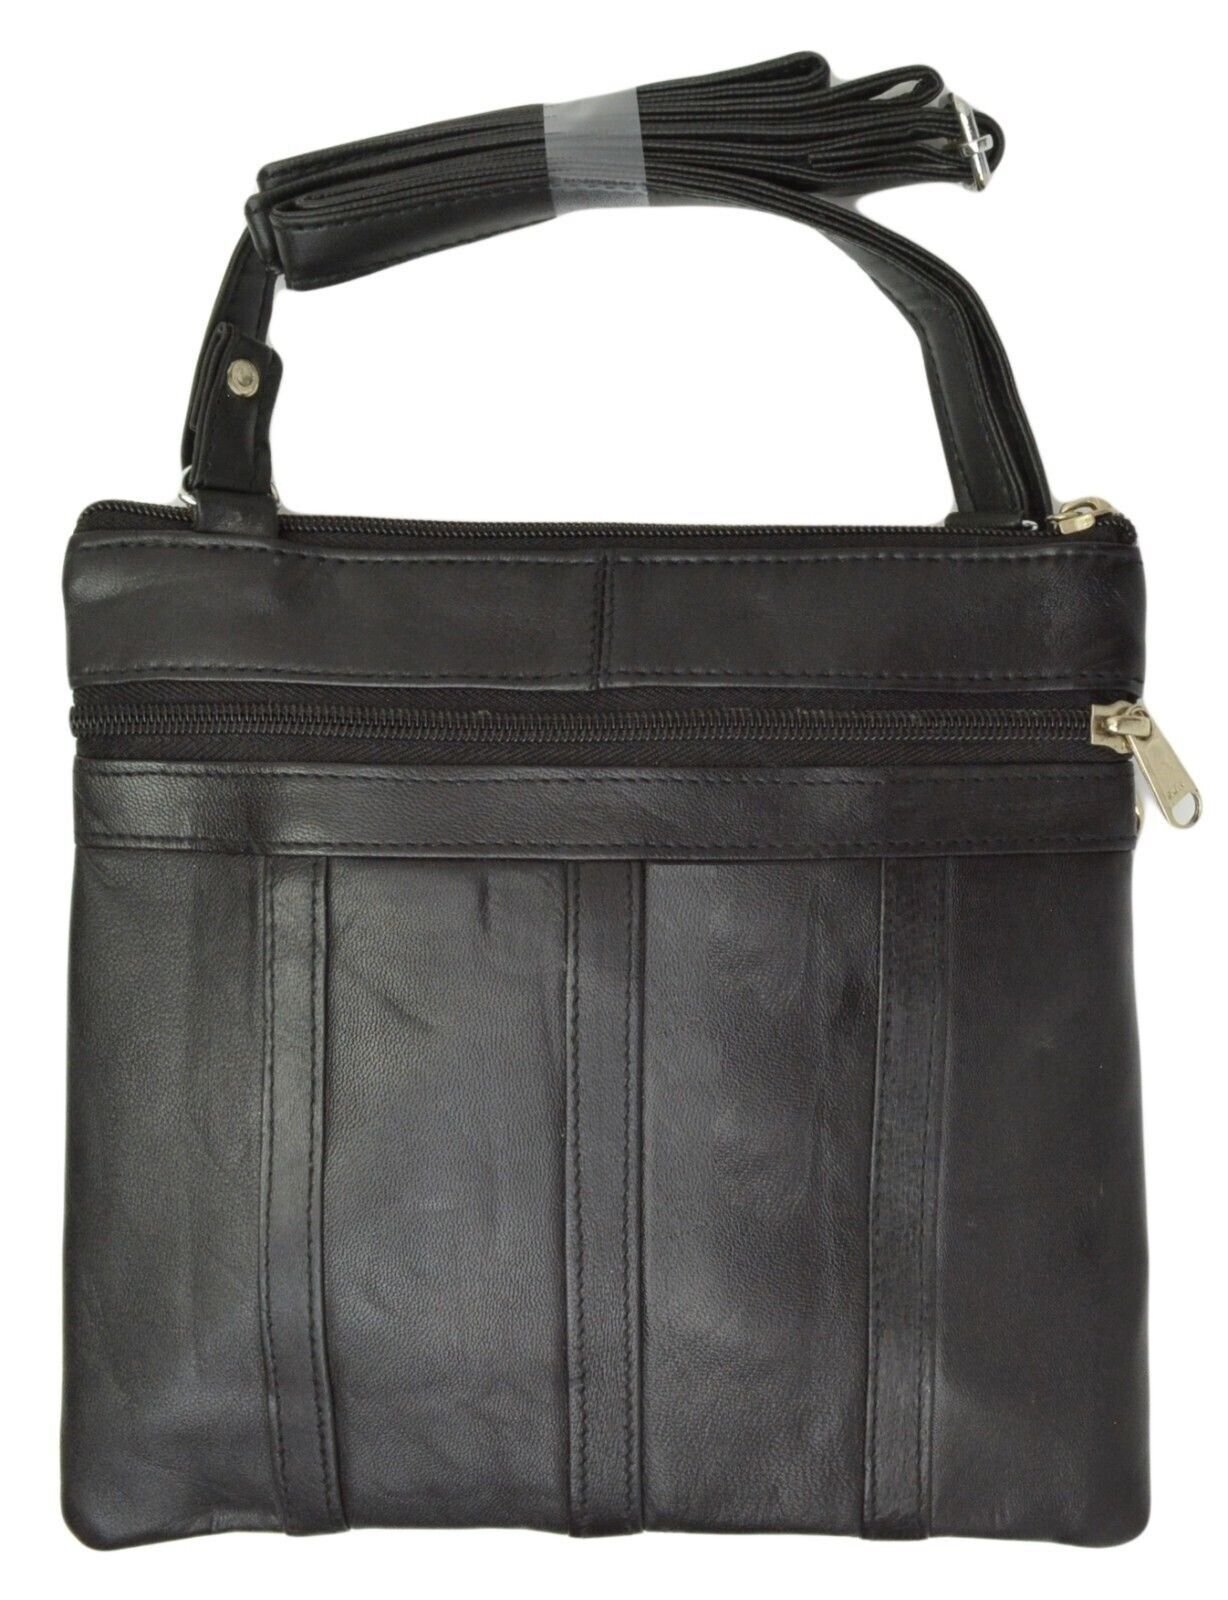 Womens Genuine Leather Cross Body Bag Shoulder Bag Black Ladies Bag